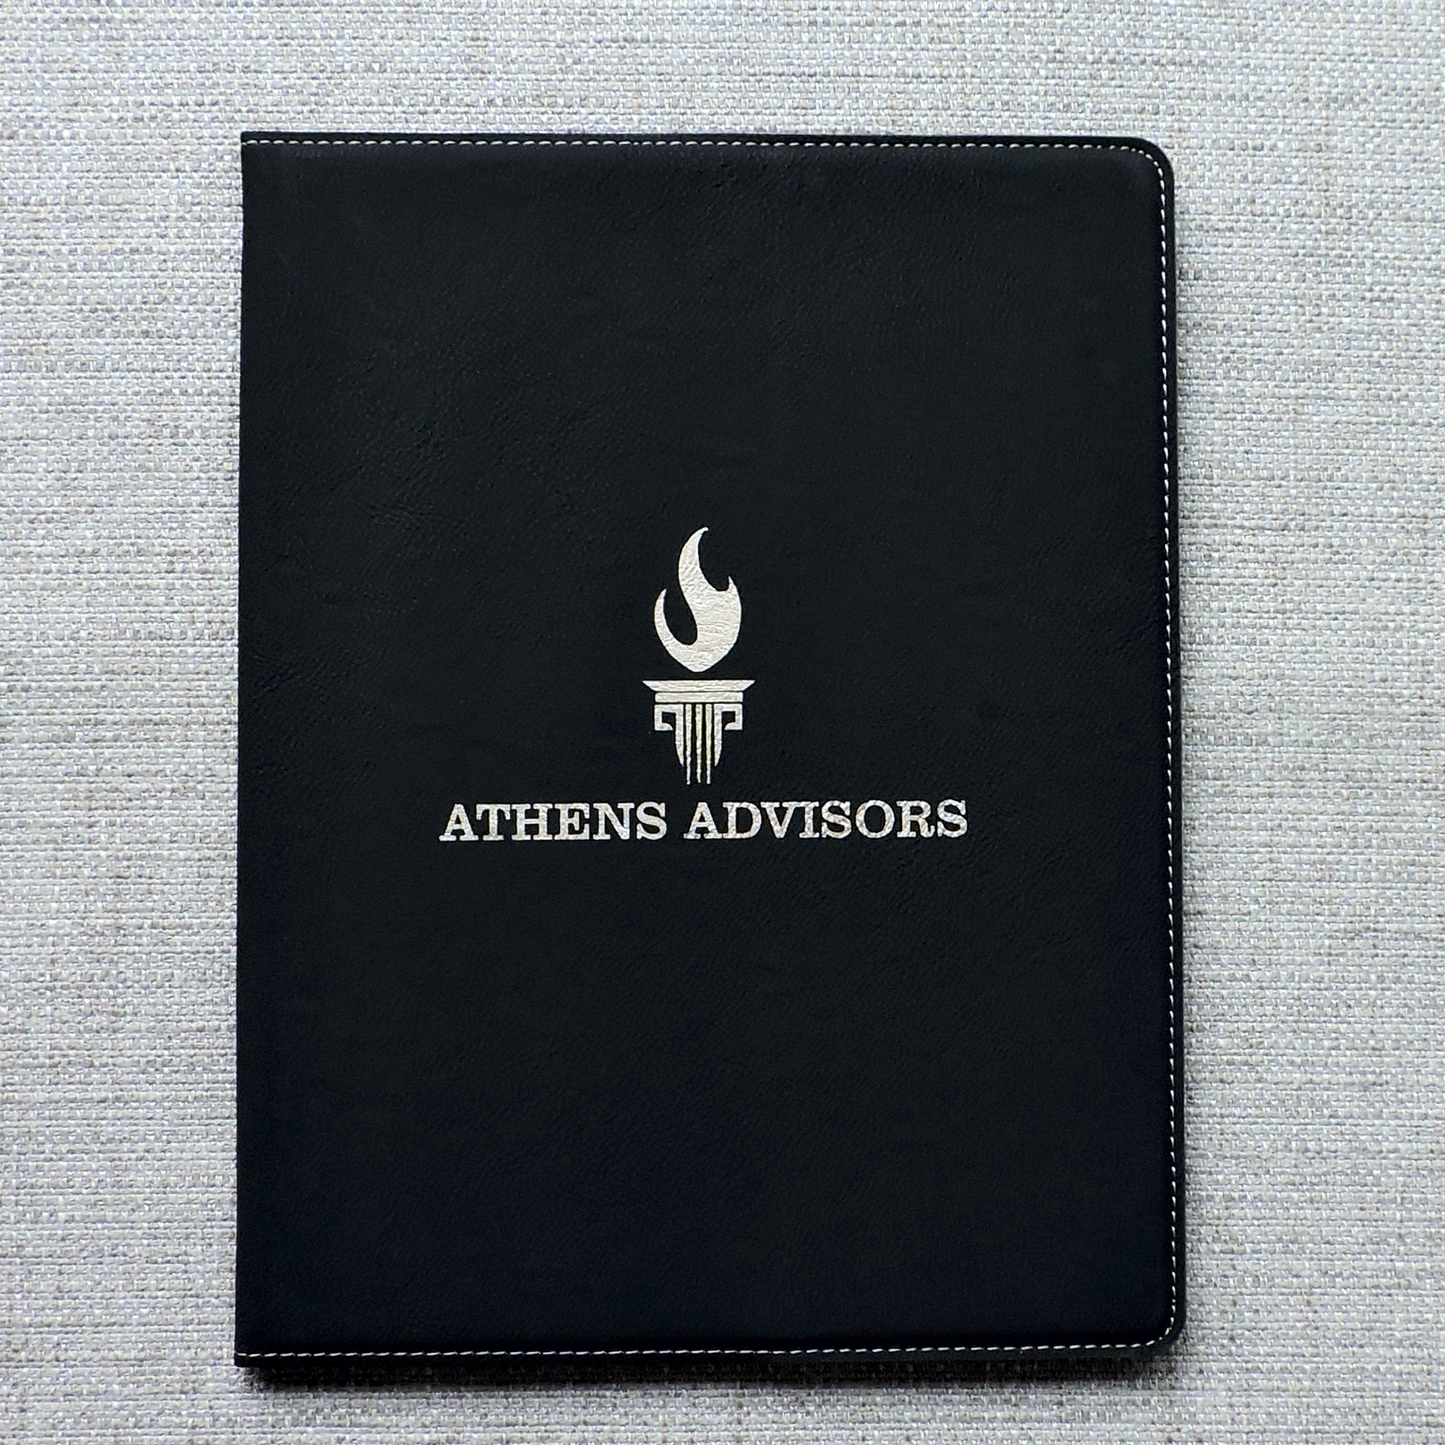 Gray Leather Portfolio with Business Logo, Corporate Gift, Company Logo,  Personalized Logo Padfolio Folio